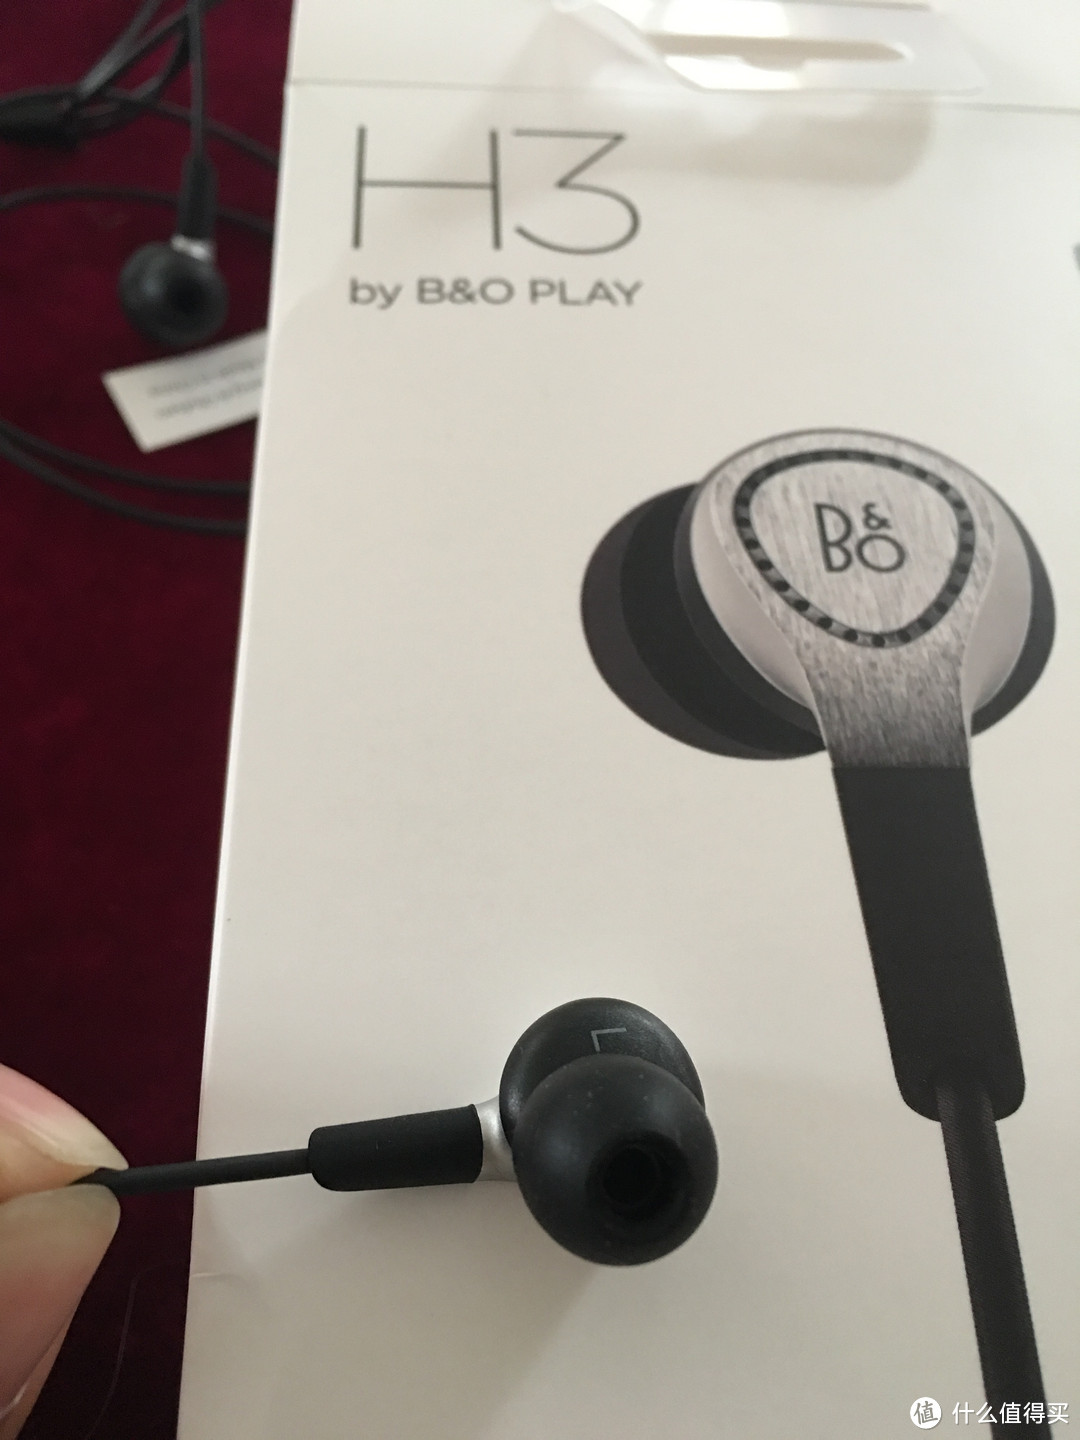 LG G5 的首发购买福利赠品 B&O PLAY H3 耳机 简单开箱